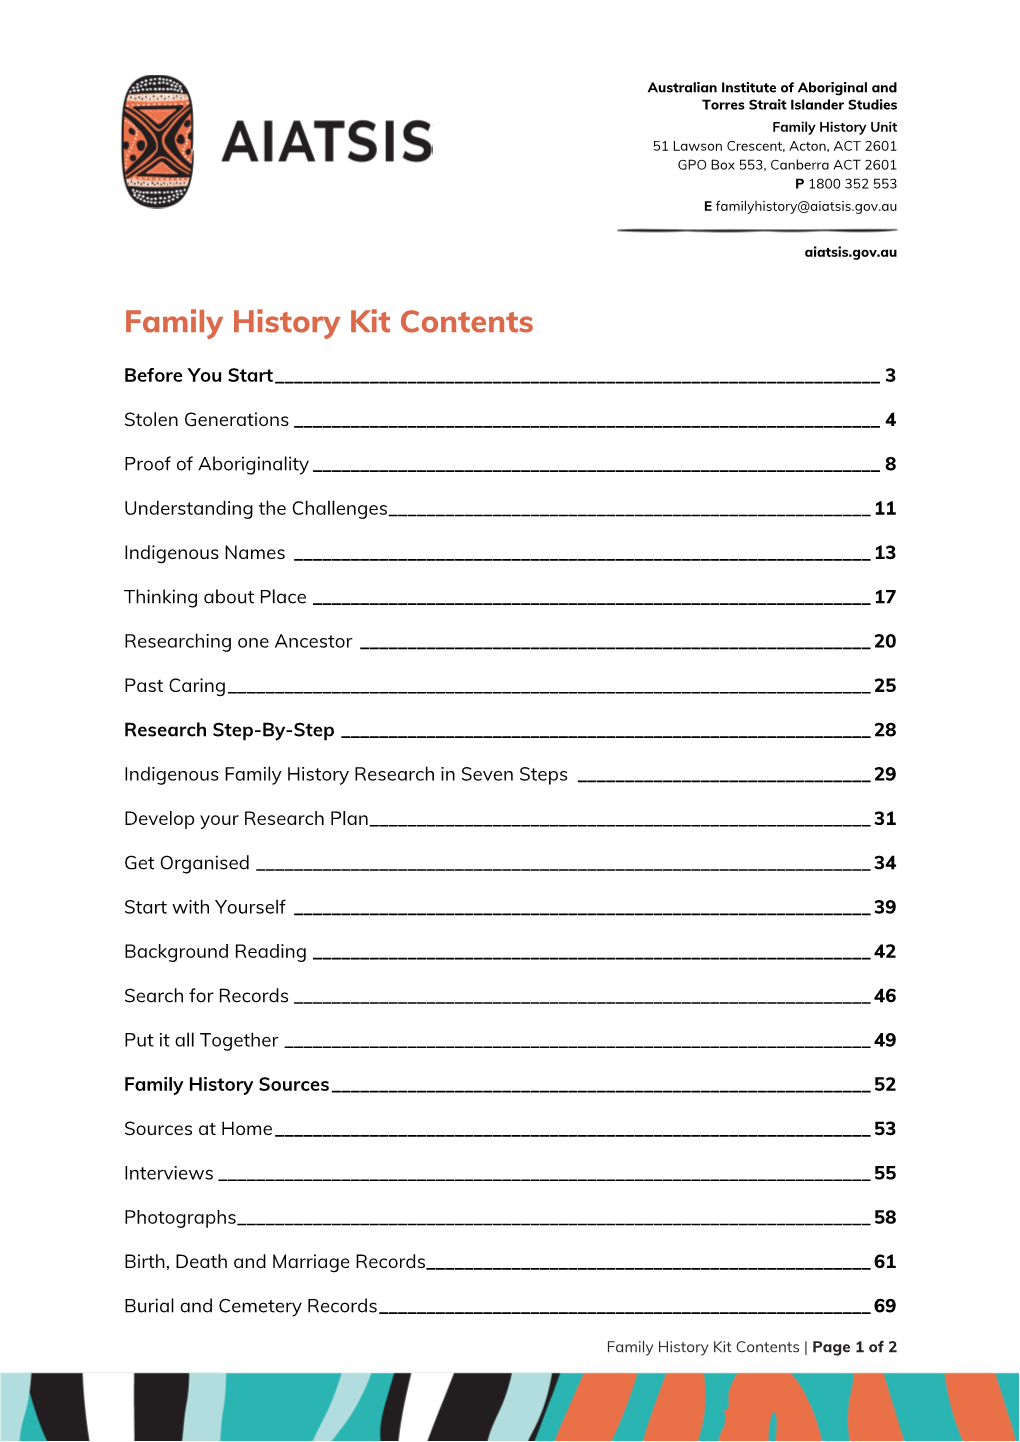 Family History Kit Contents